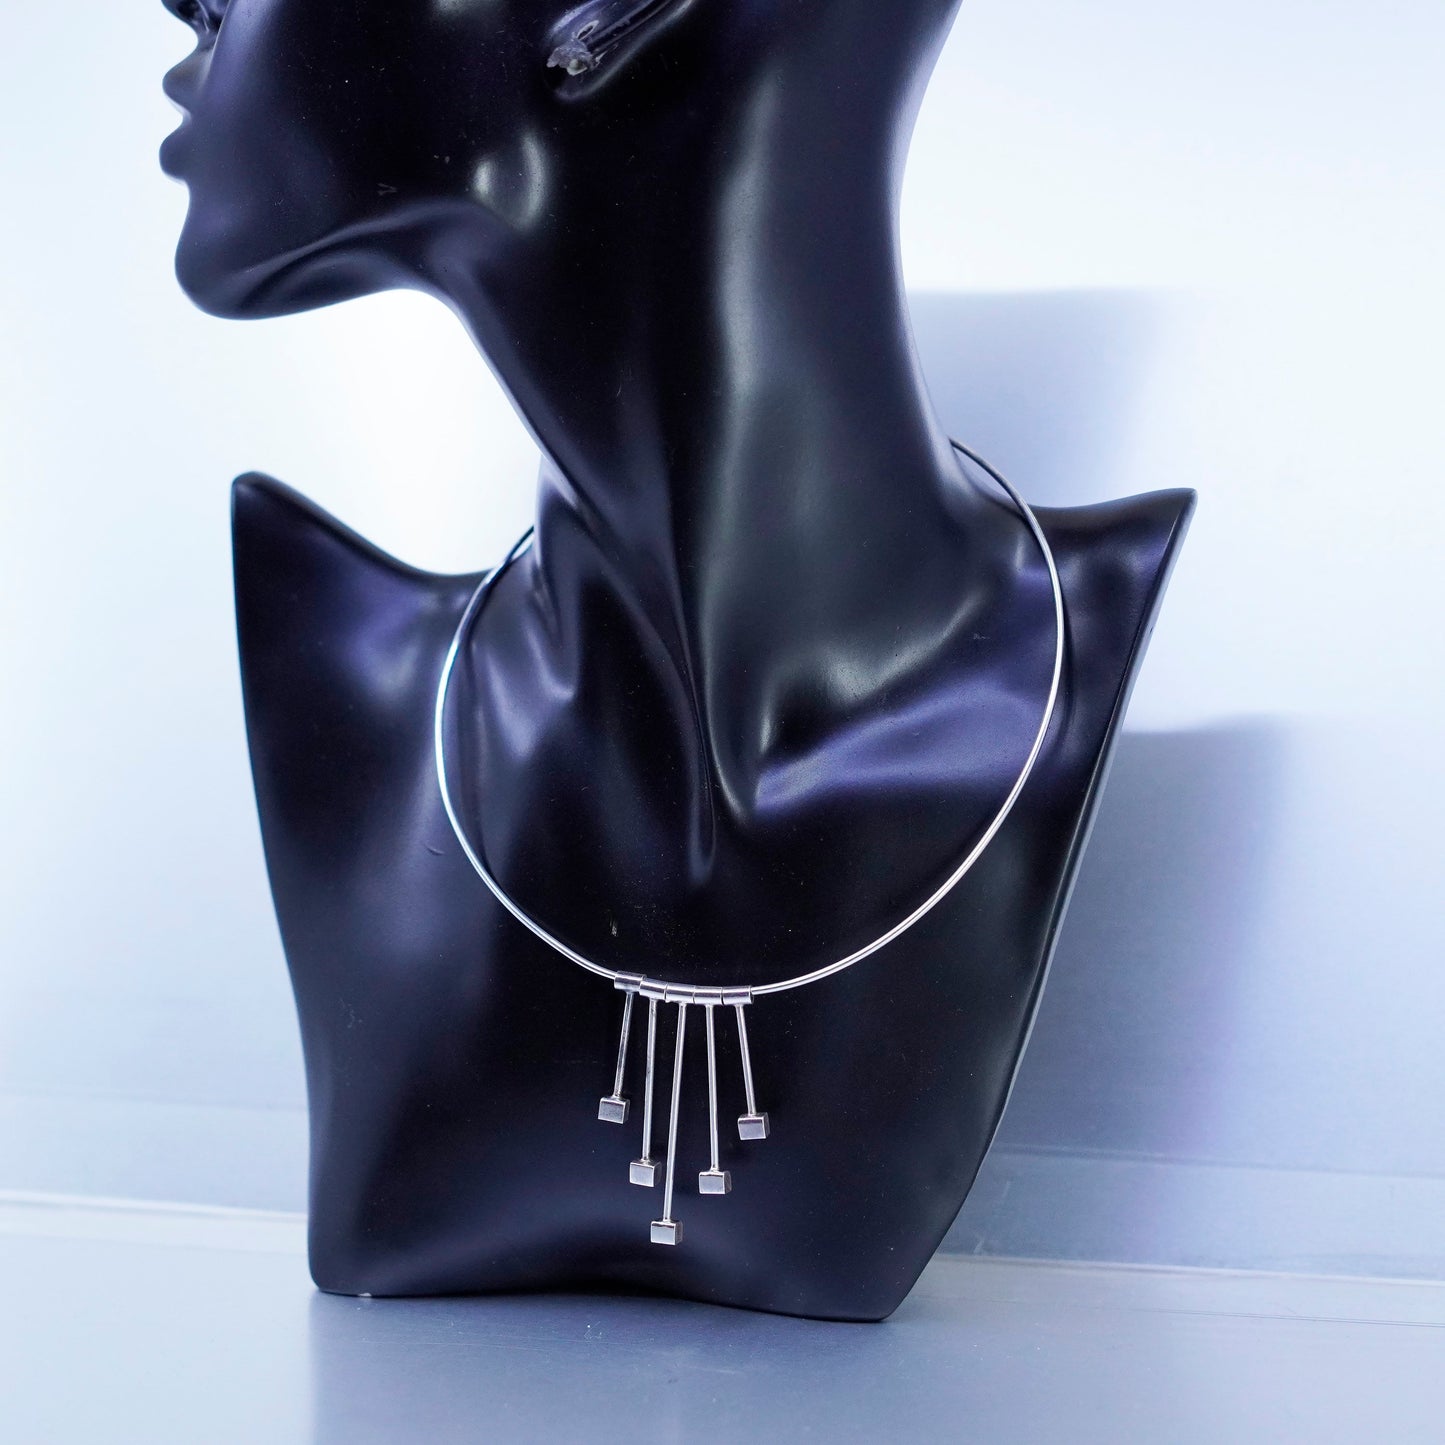 13”, Sterling 925 silver handmade choker collar necklace cube fringe pendant